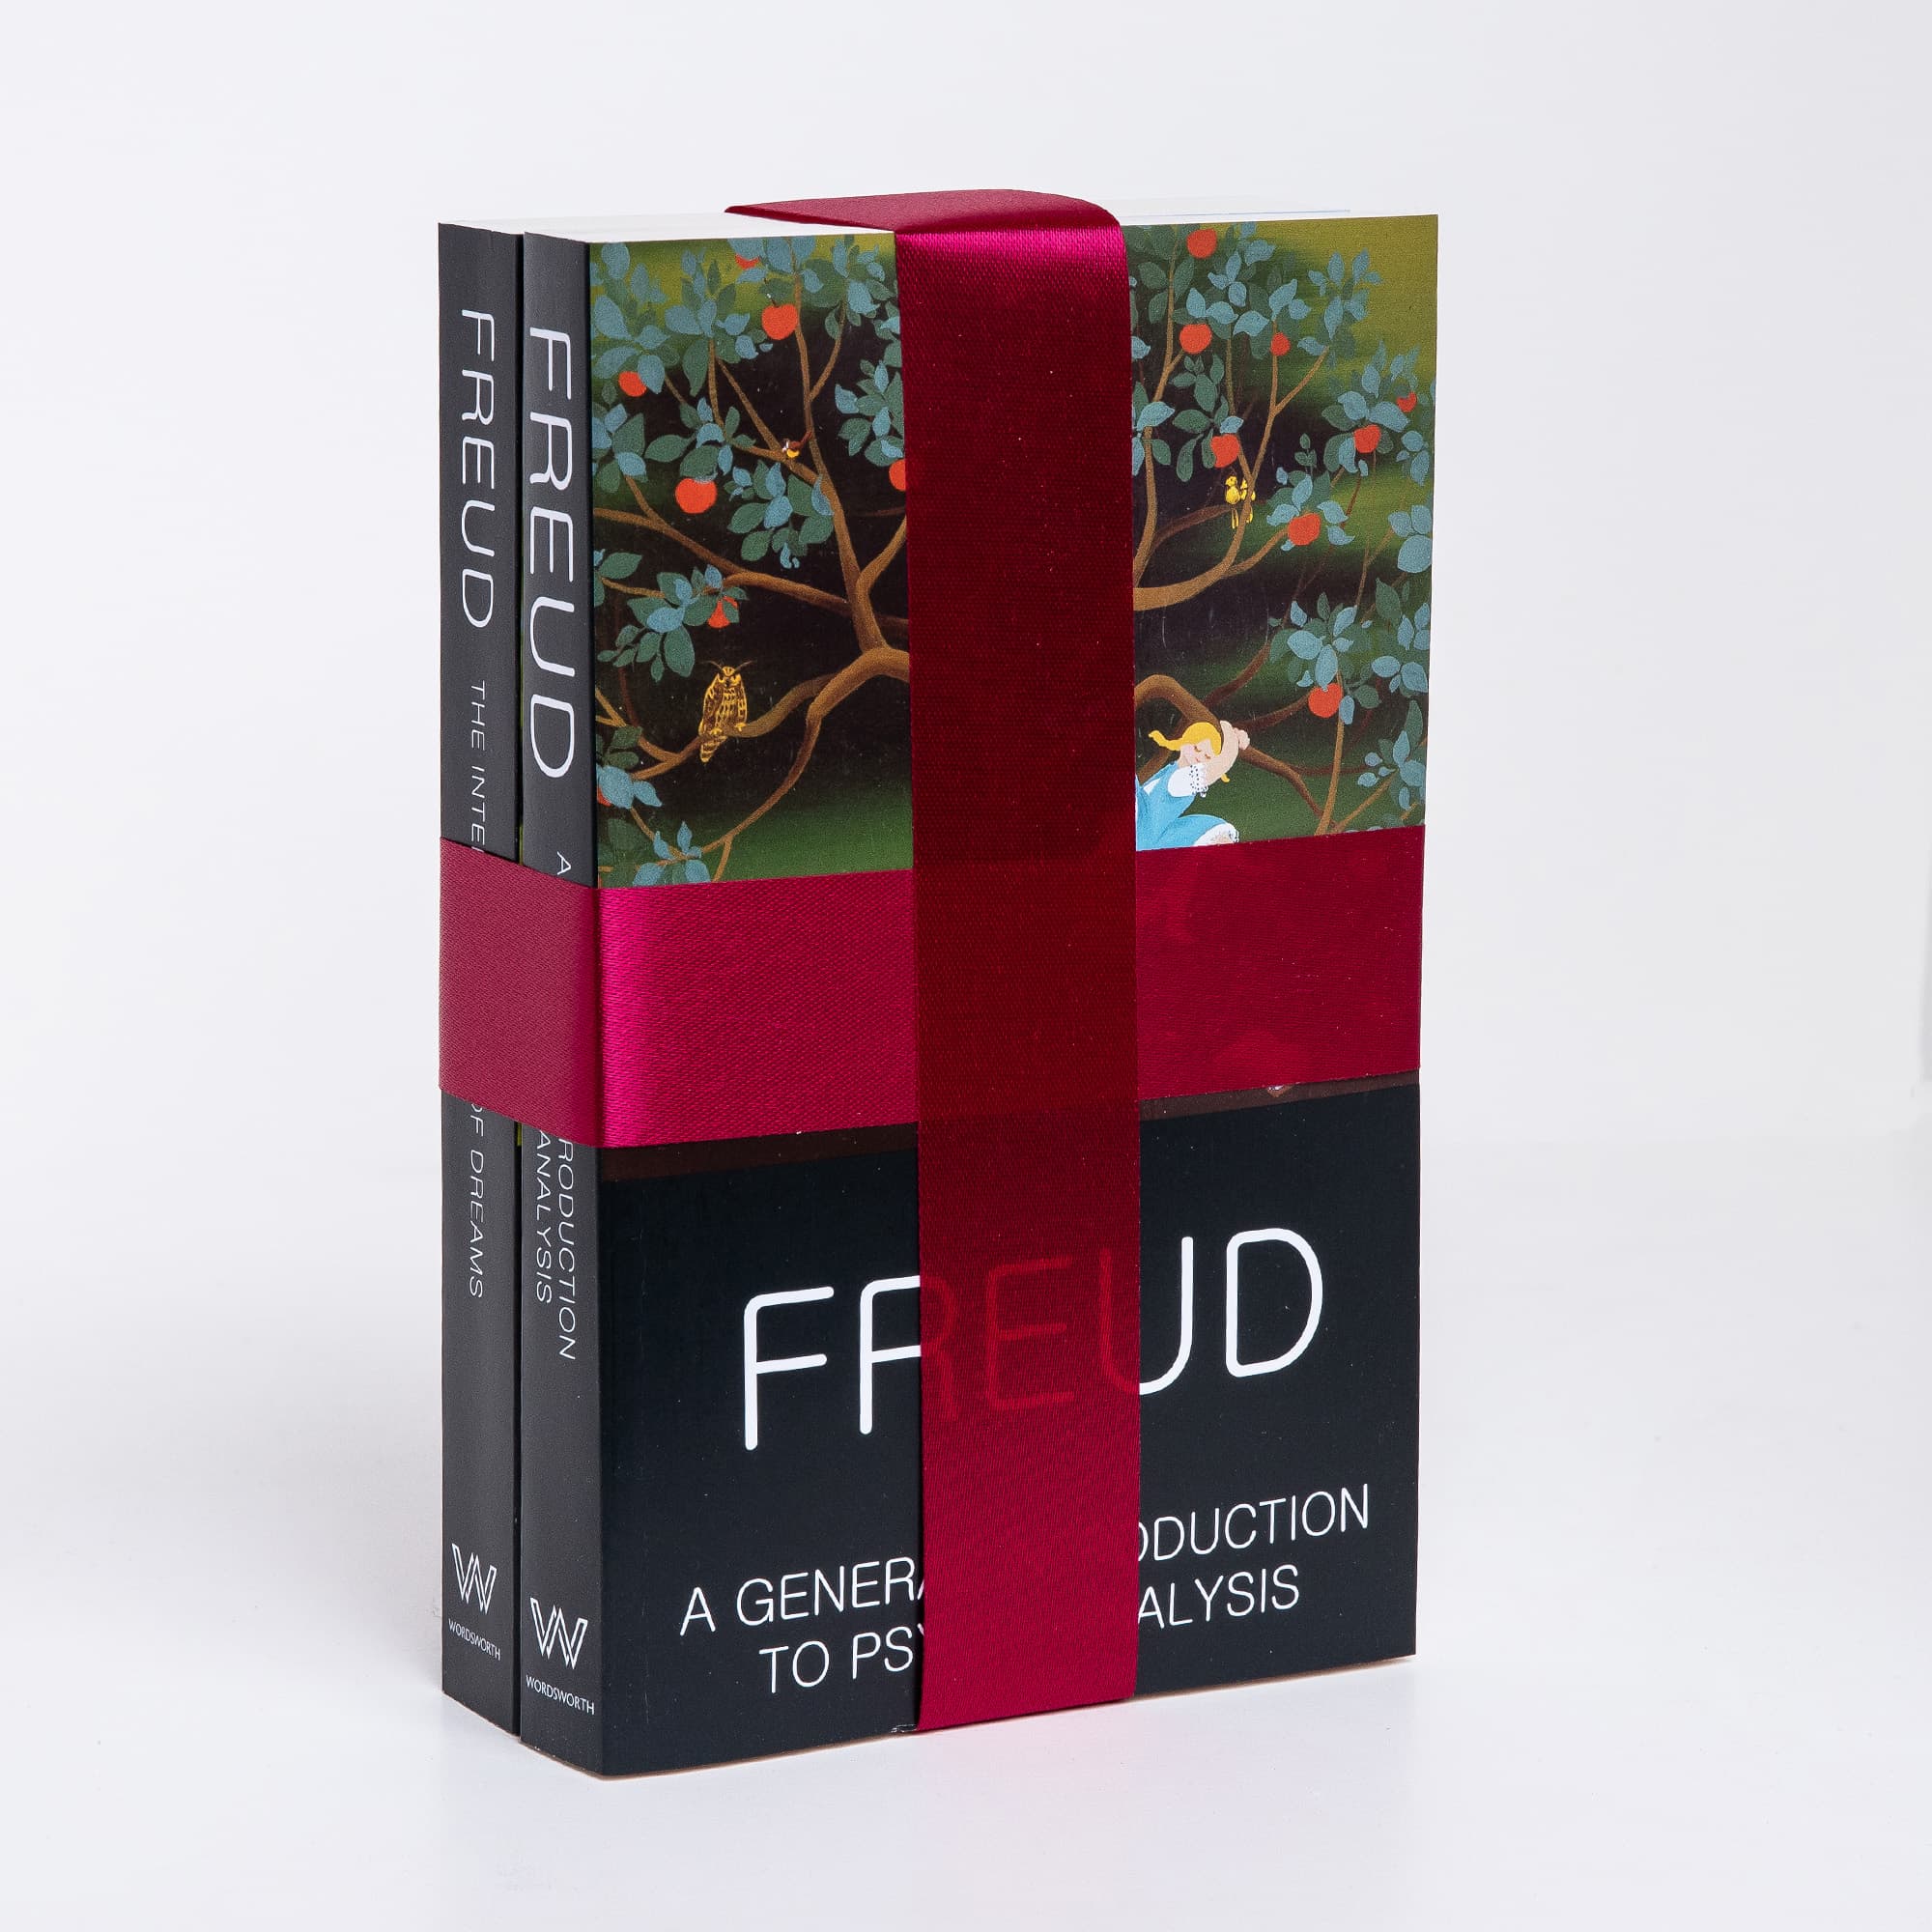 Freud books gift